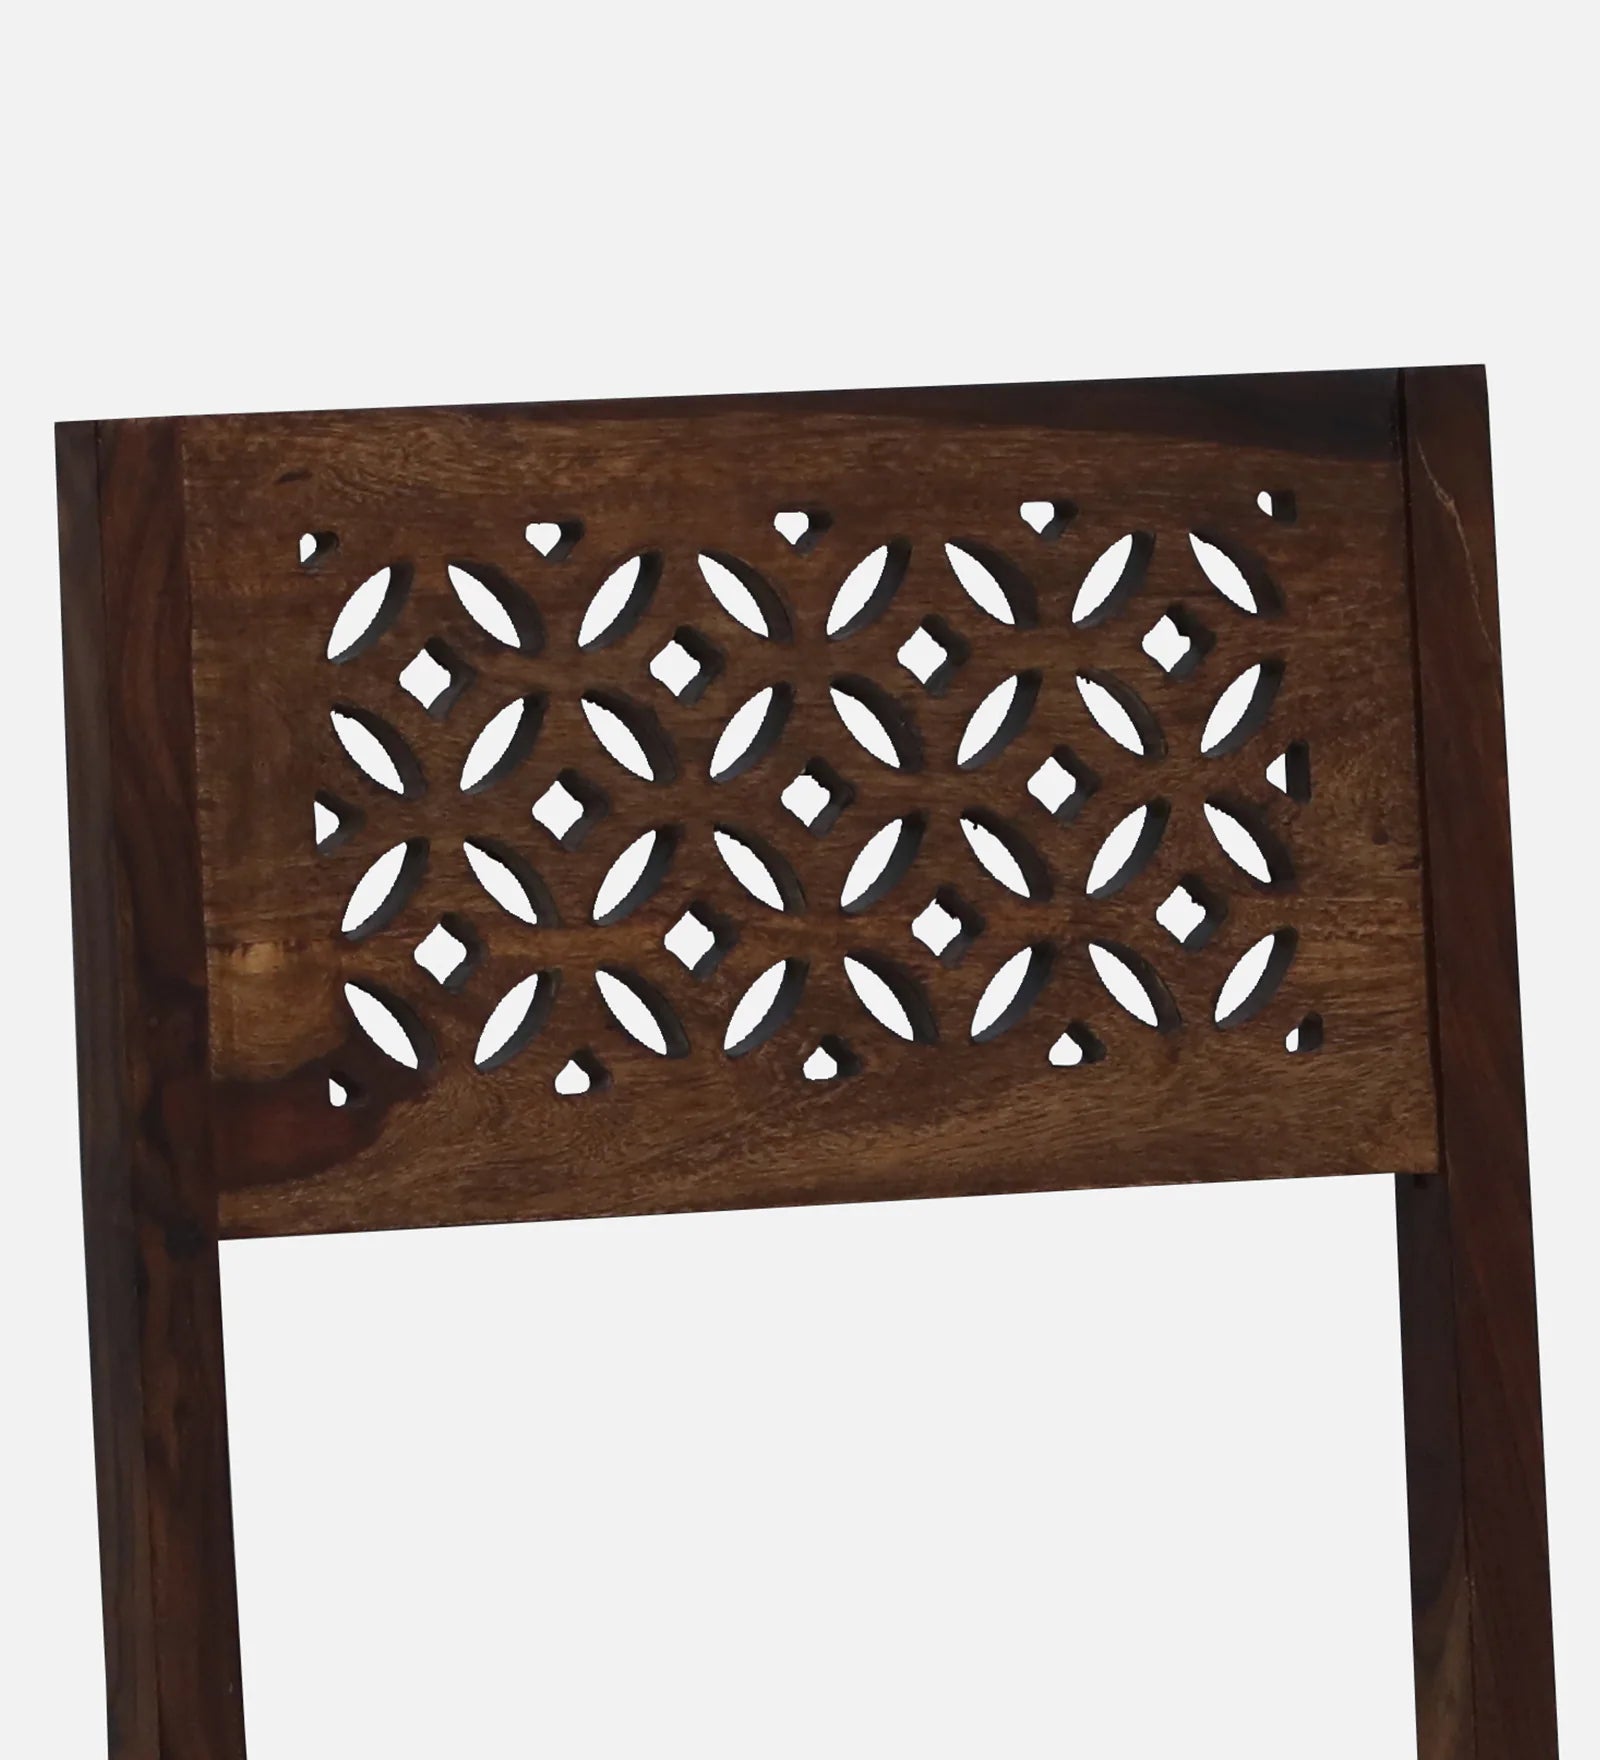 Penza Solid Wood Dining Chair (Set Of 2) In Provincial Teak Finish By Rajwada - Rajwada Furnish